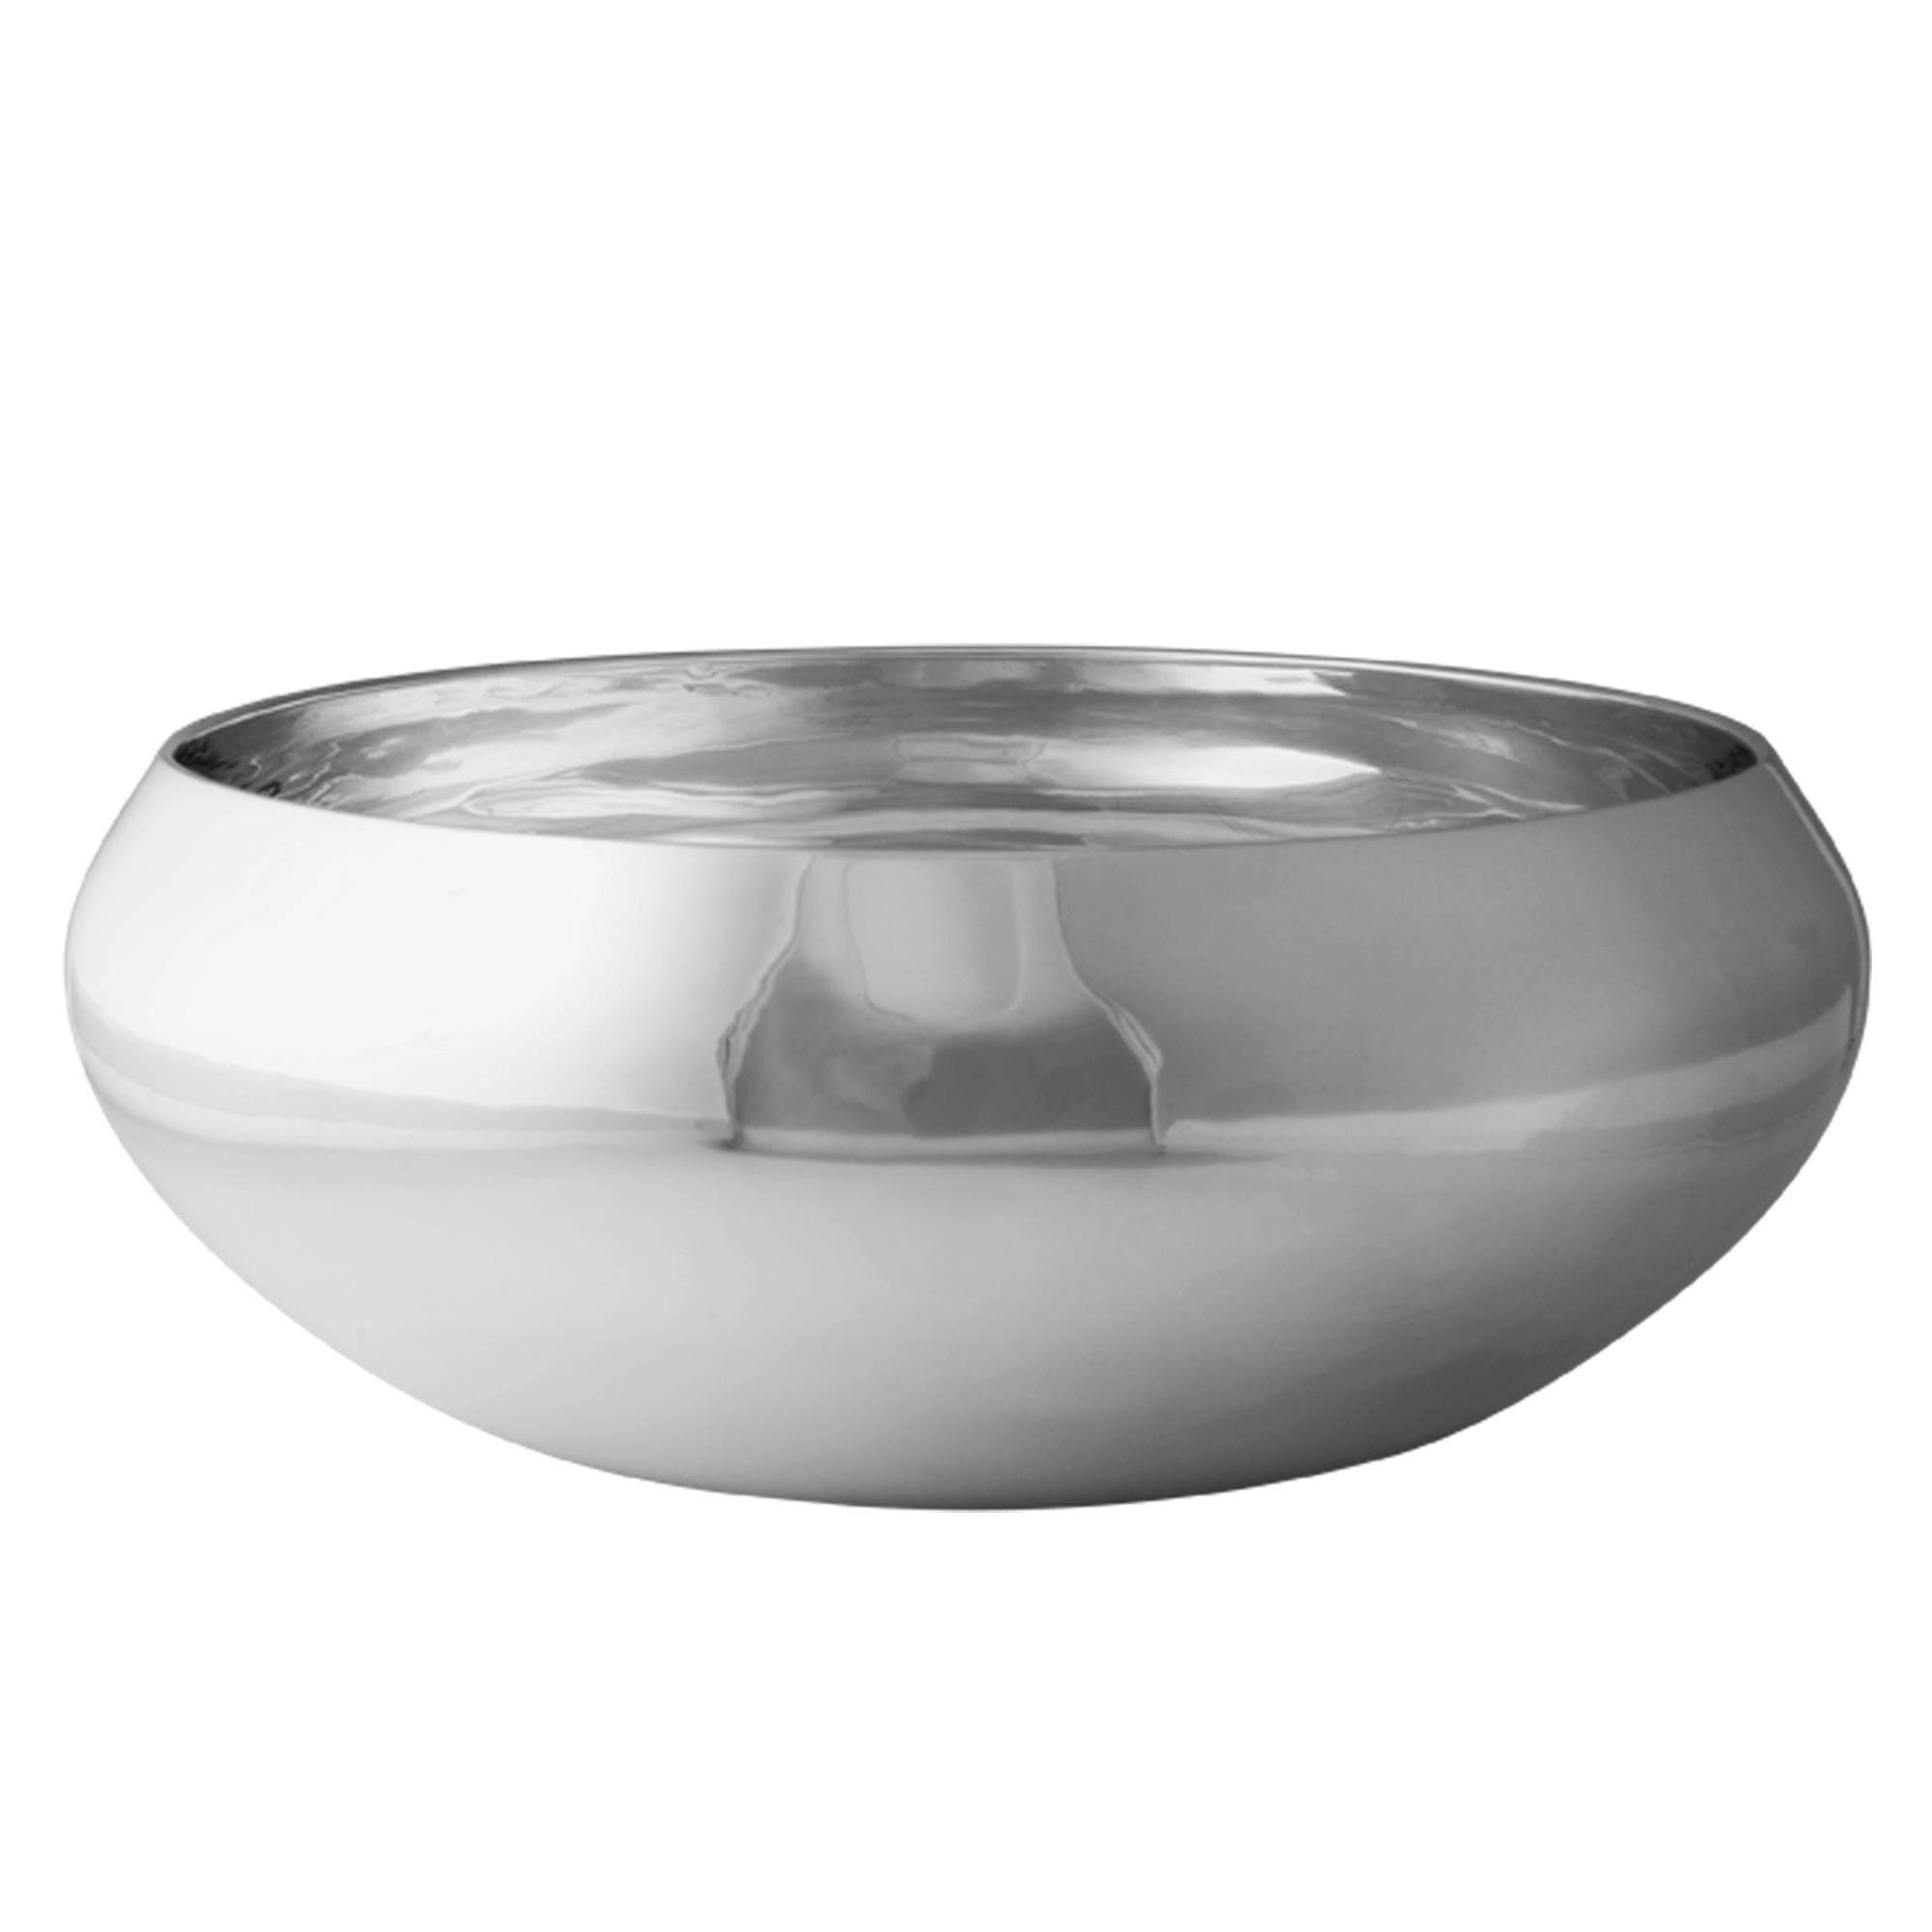 Kay Bojesen Nest Bowl hecho de acero pulido, grande